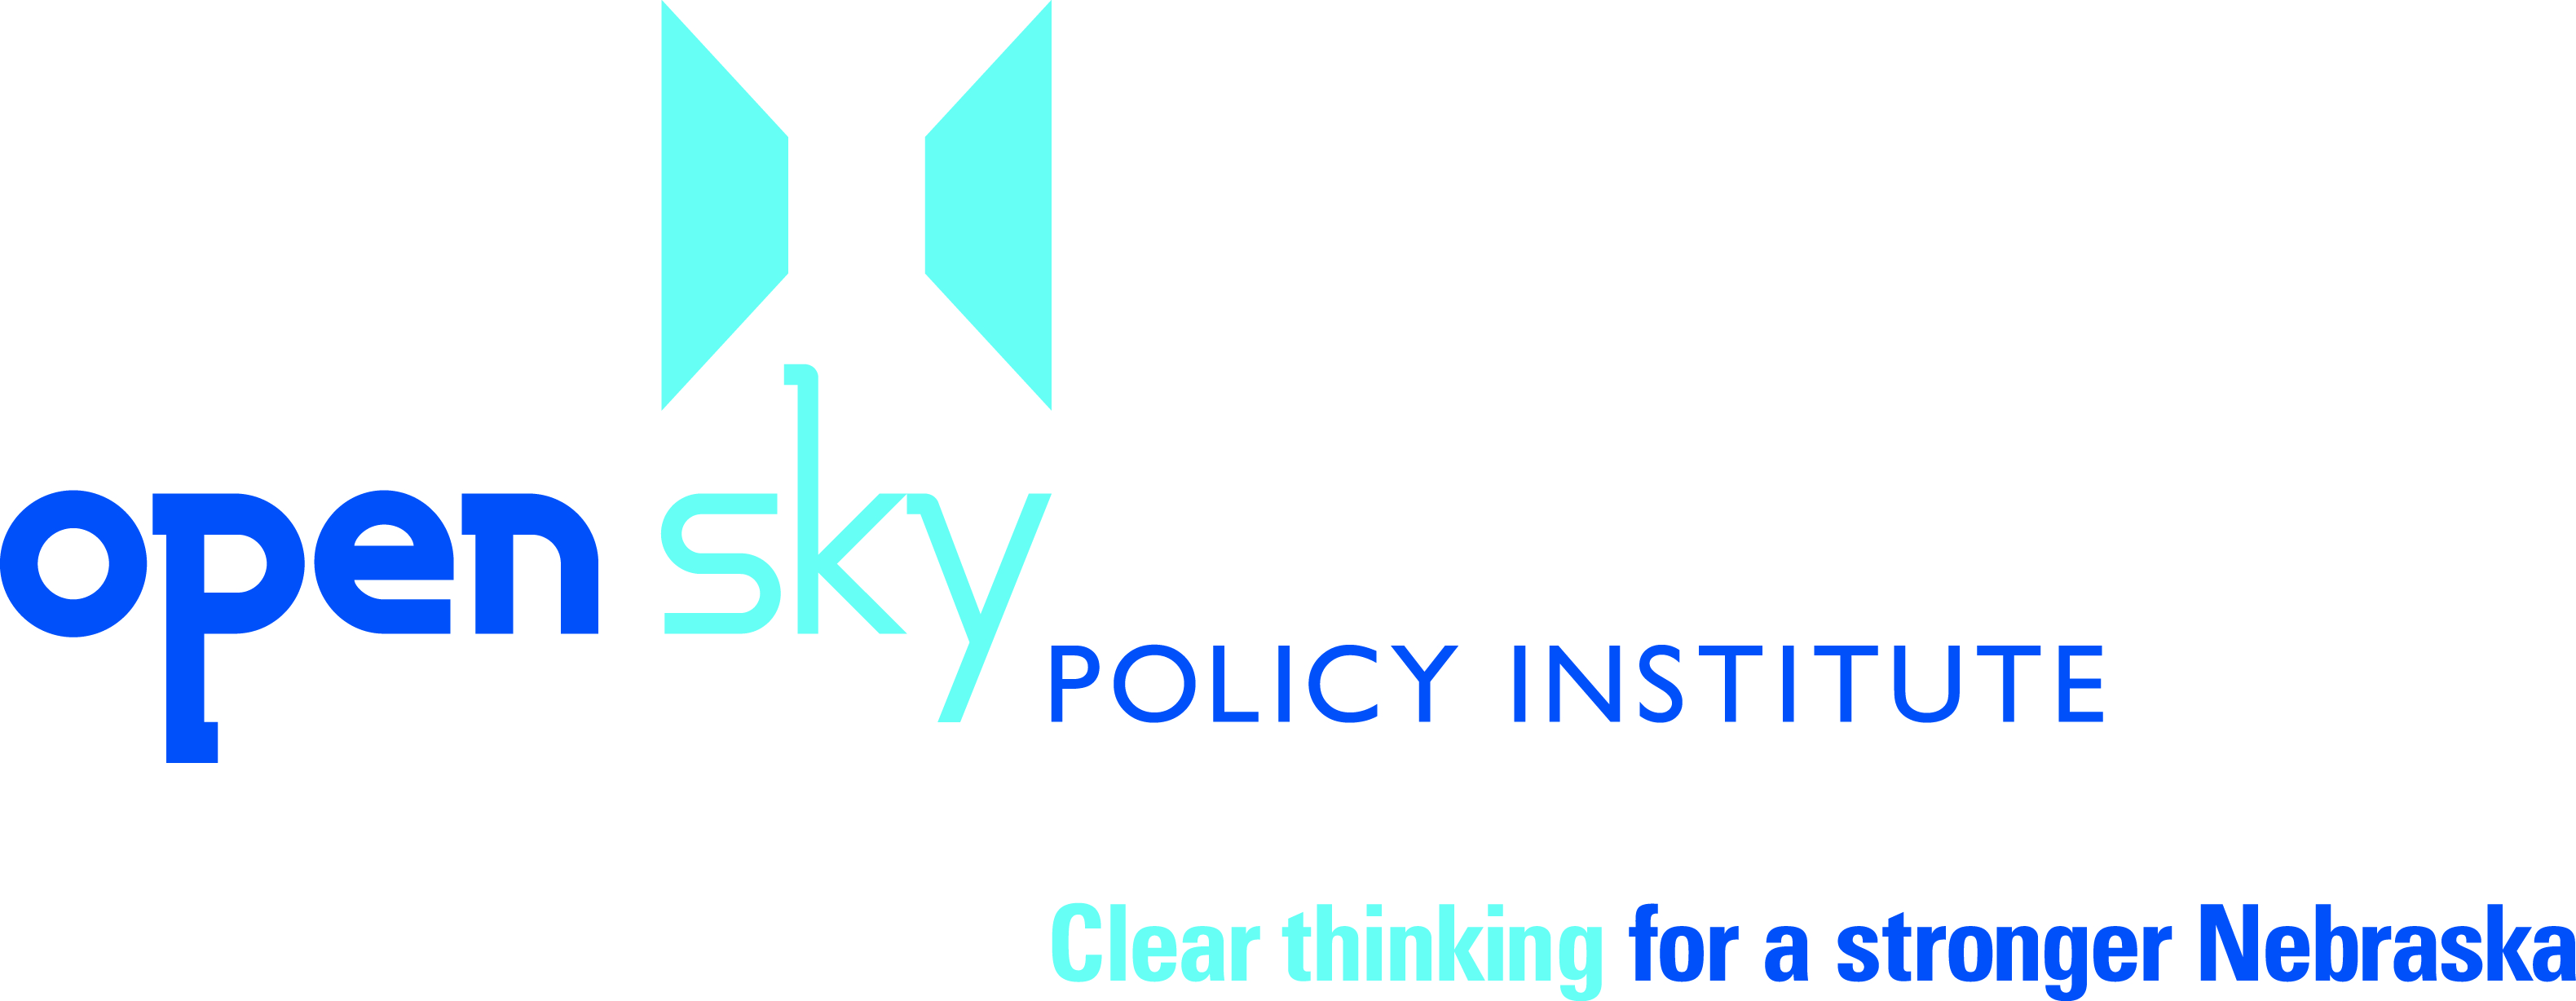 OpenSky Policy Institute